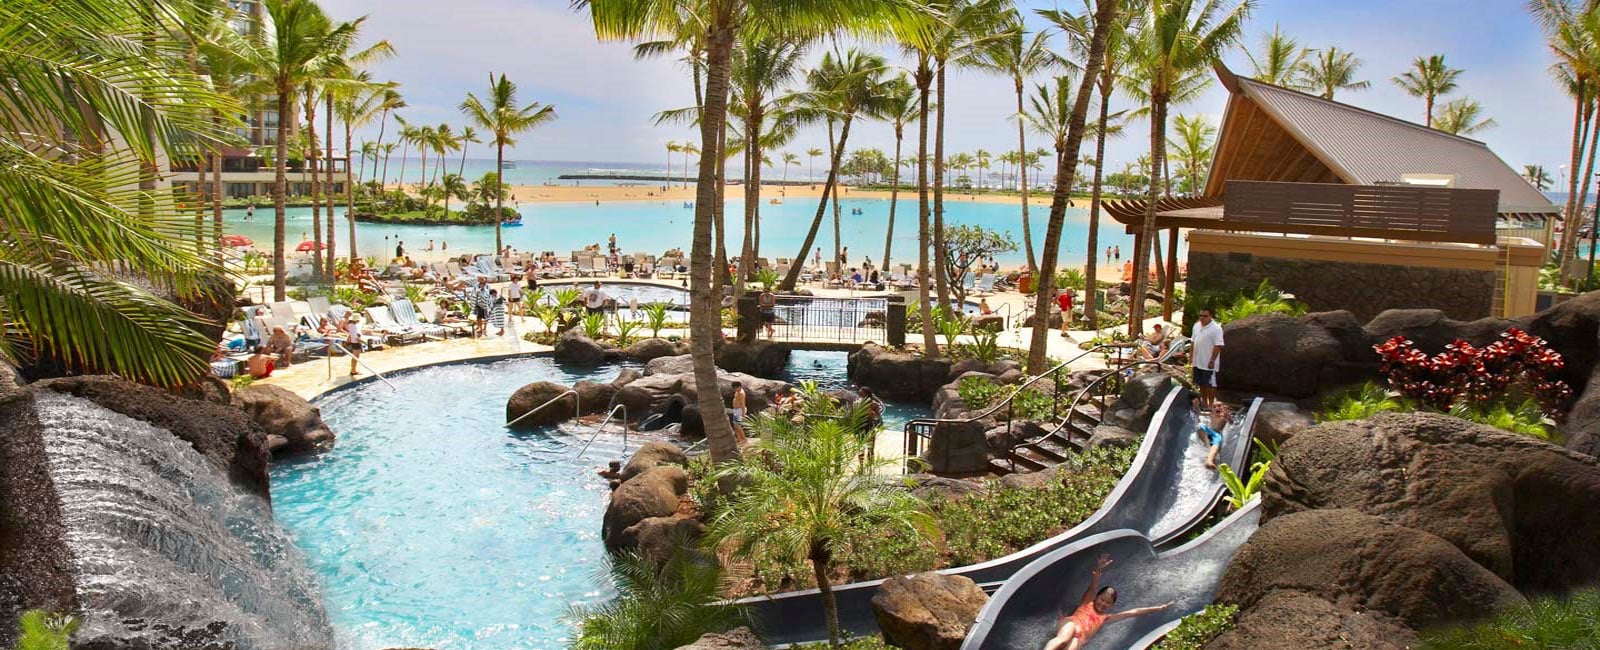 Kalia Suites By Hilton Grand Vacations Club In Honolulu Hawaii